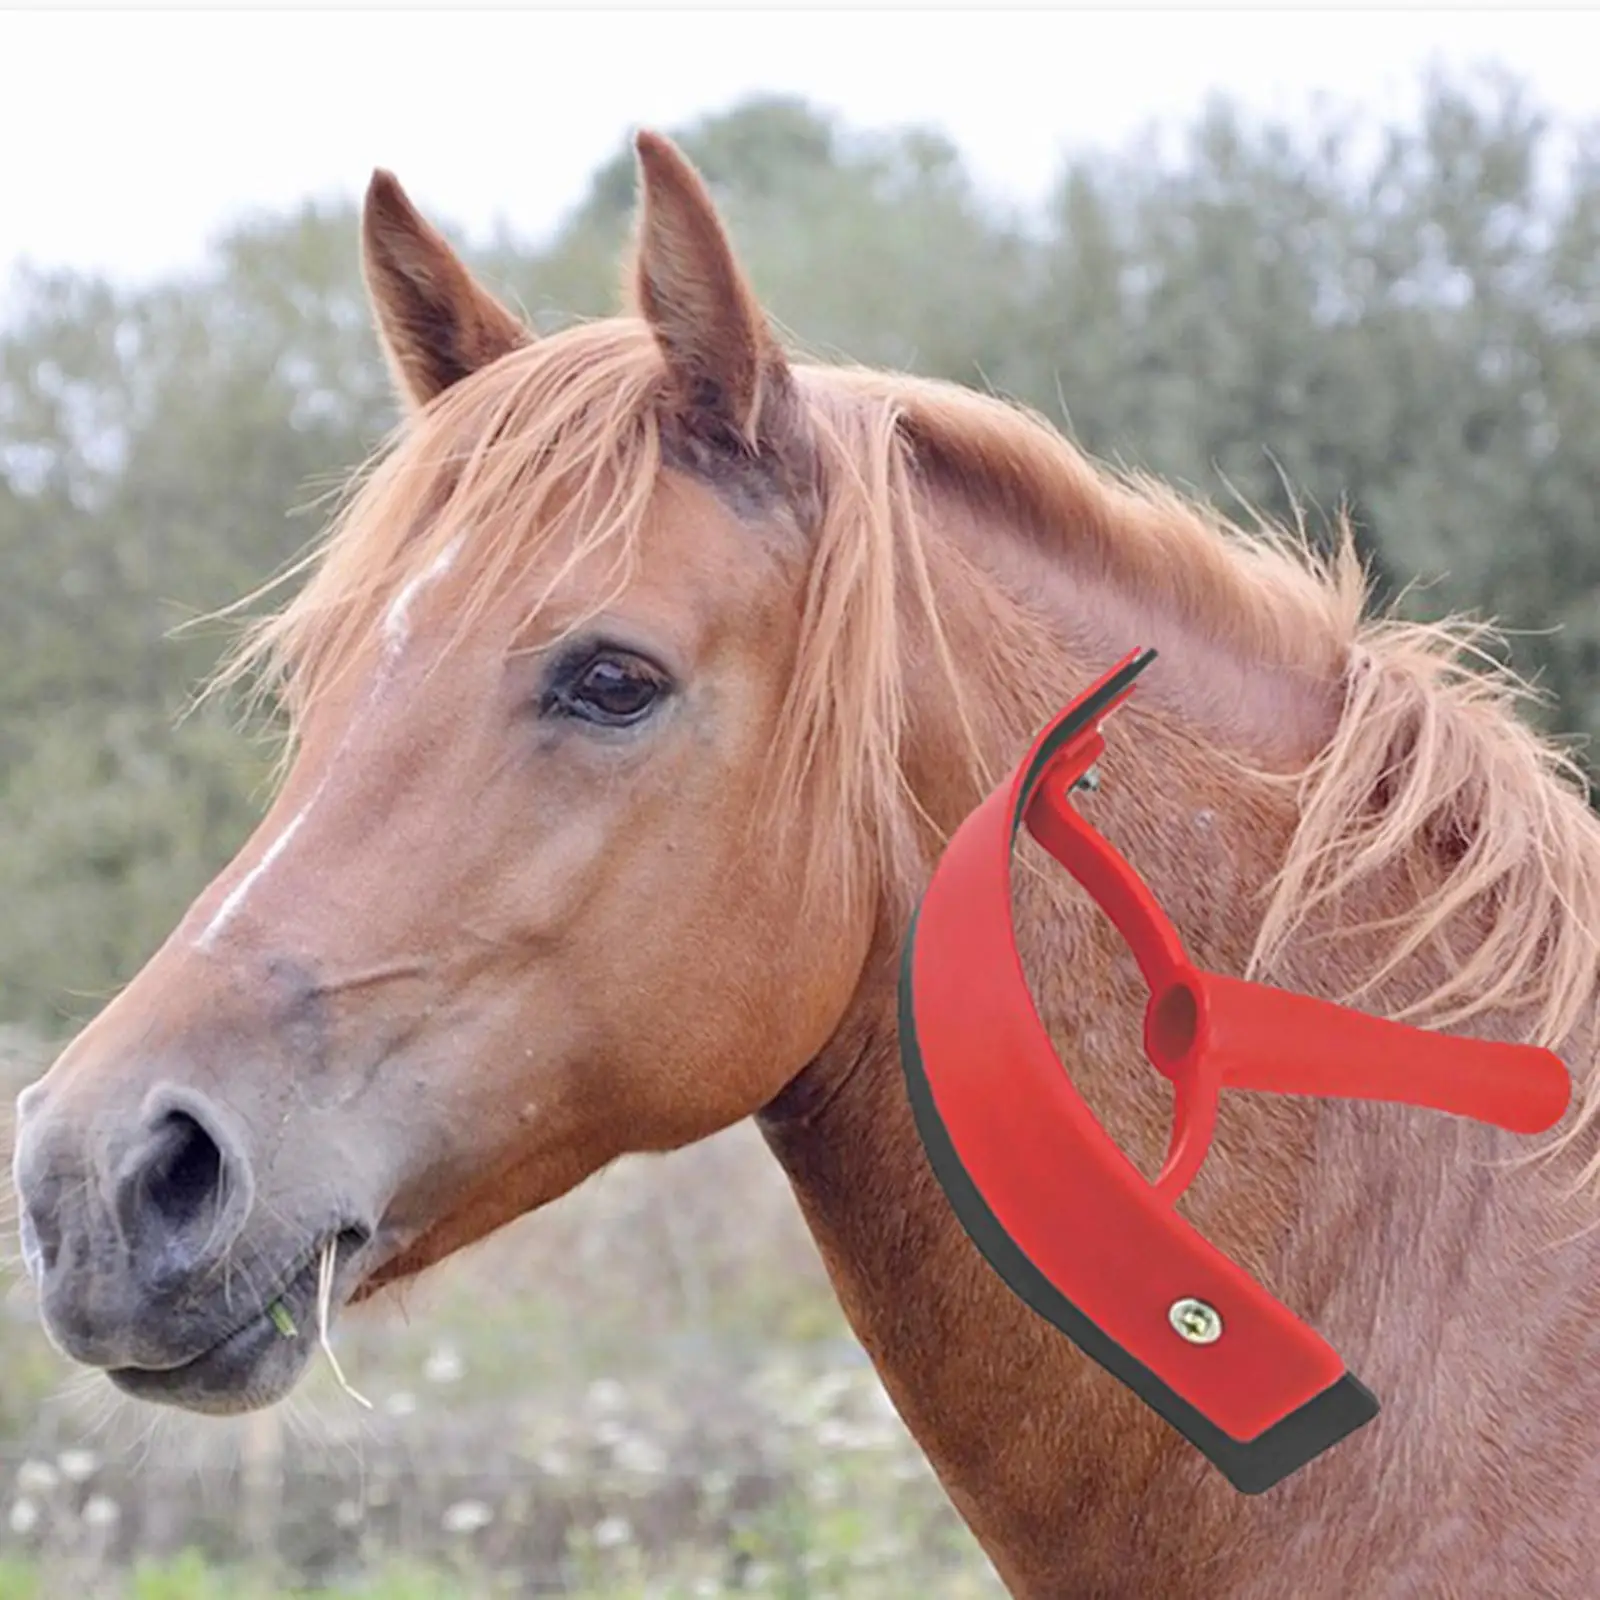 Horse Sweat Scraper Grooming Shaving Cattle Brushes Care Tool Accessories